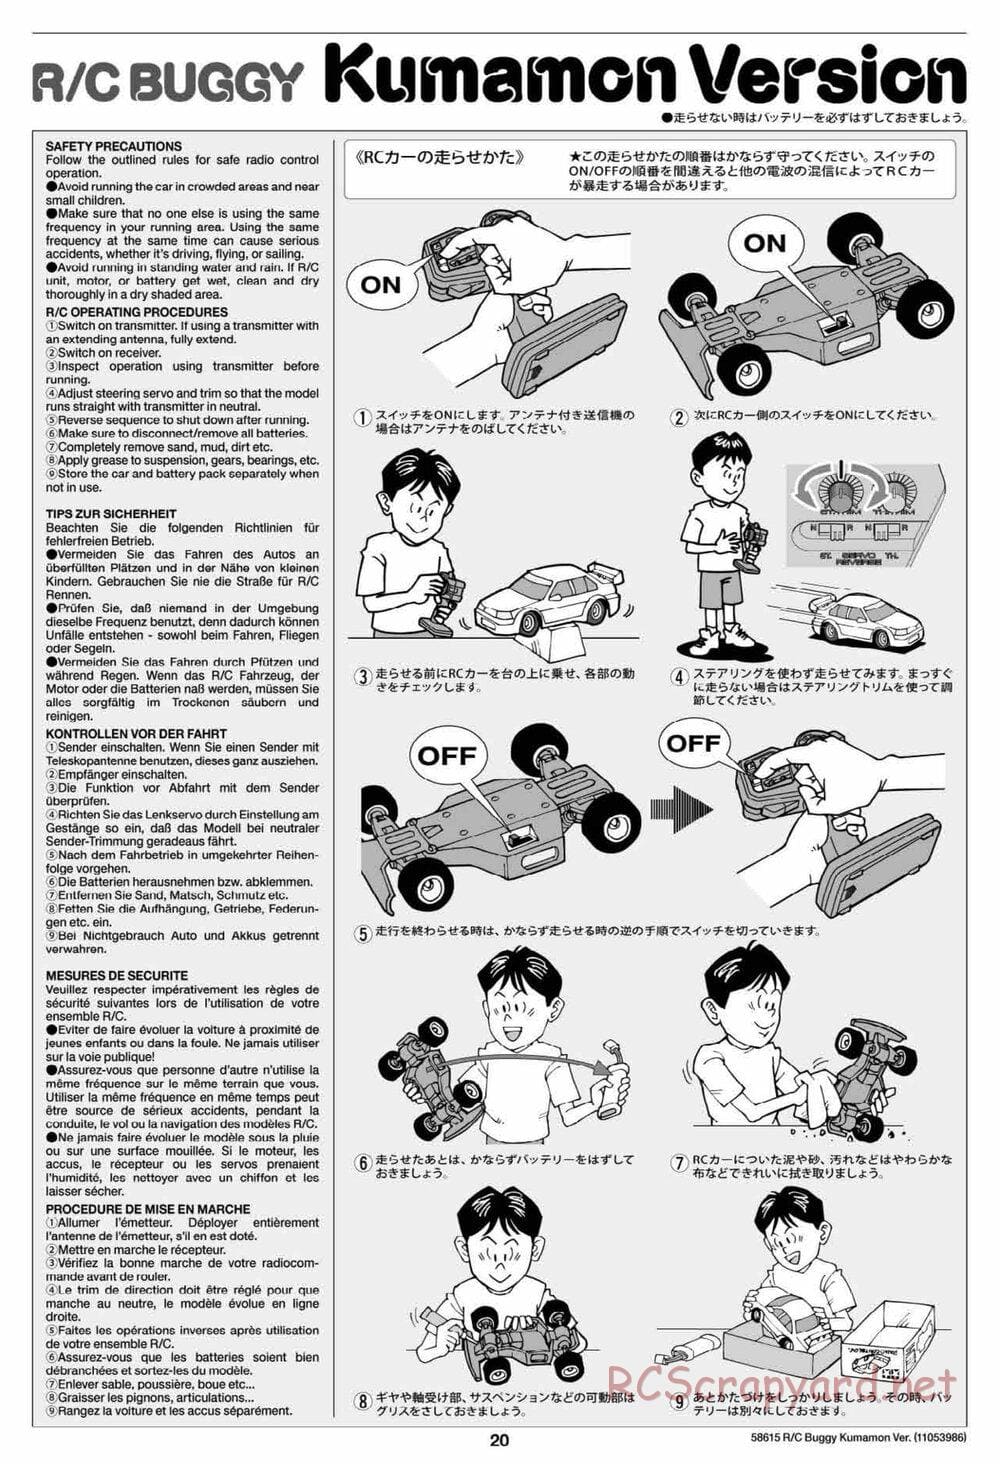 Tamiya - Buggy Kumamon Version Chassis - Manual - Page 20